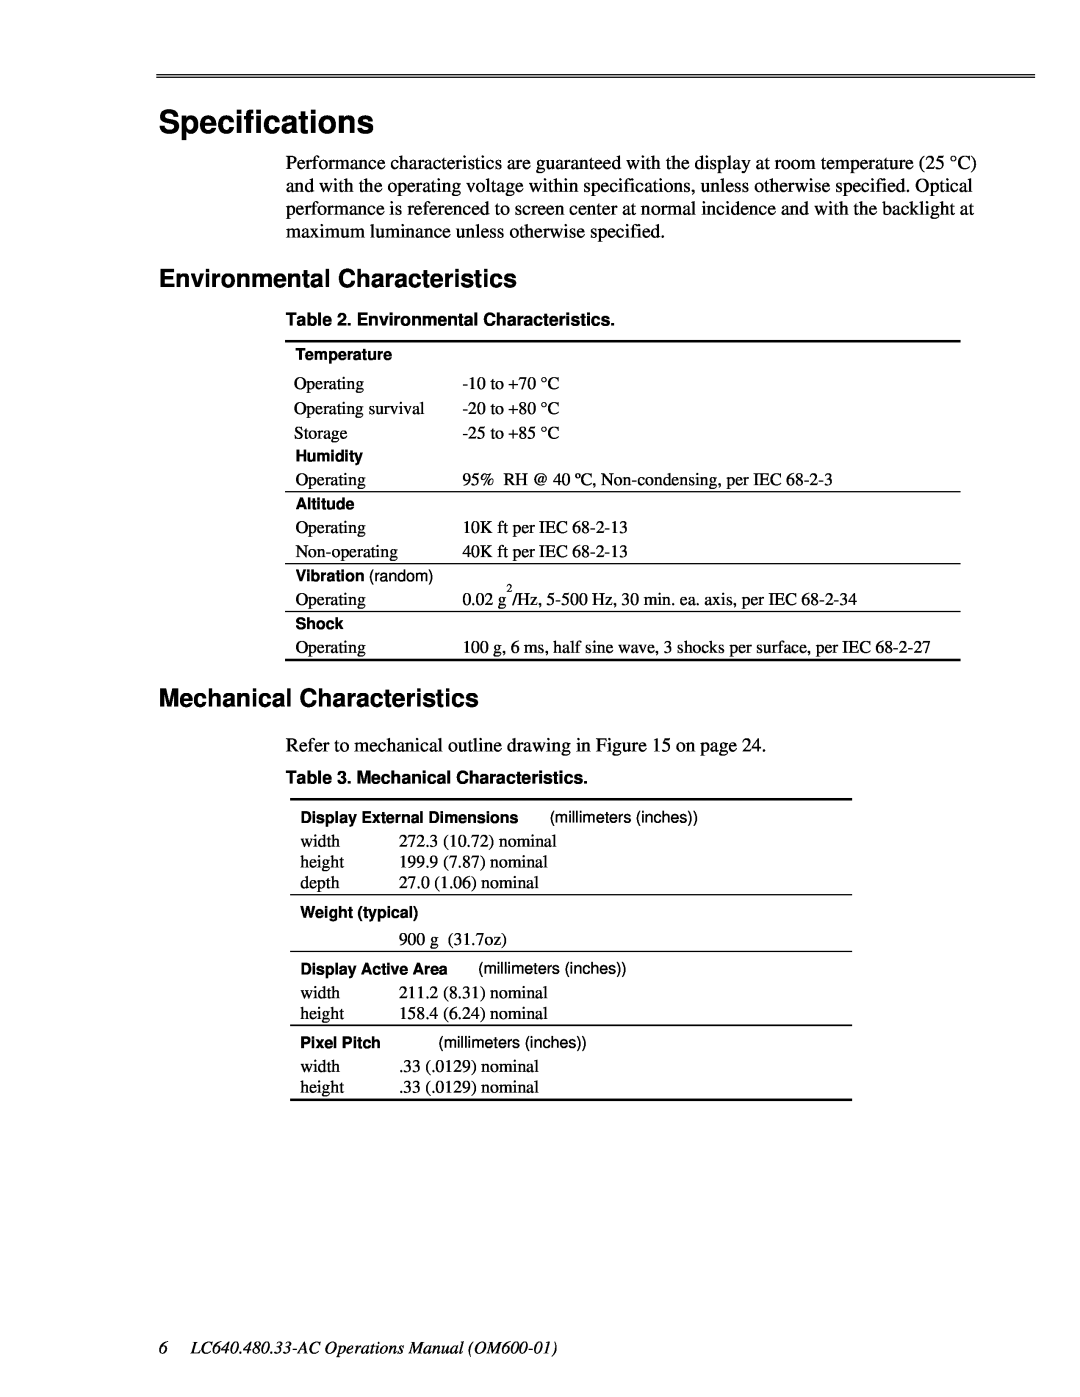 Planar LC640.480.33-AC manual Specifications, Environmental Characteristics, Mechanical Characteristics 